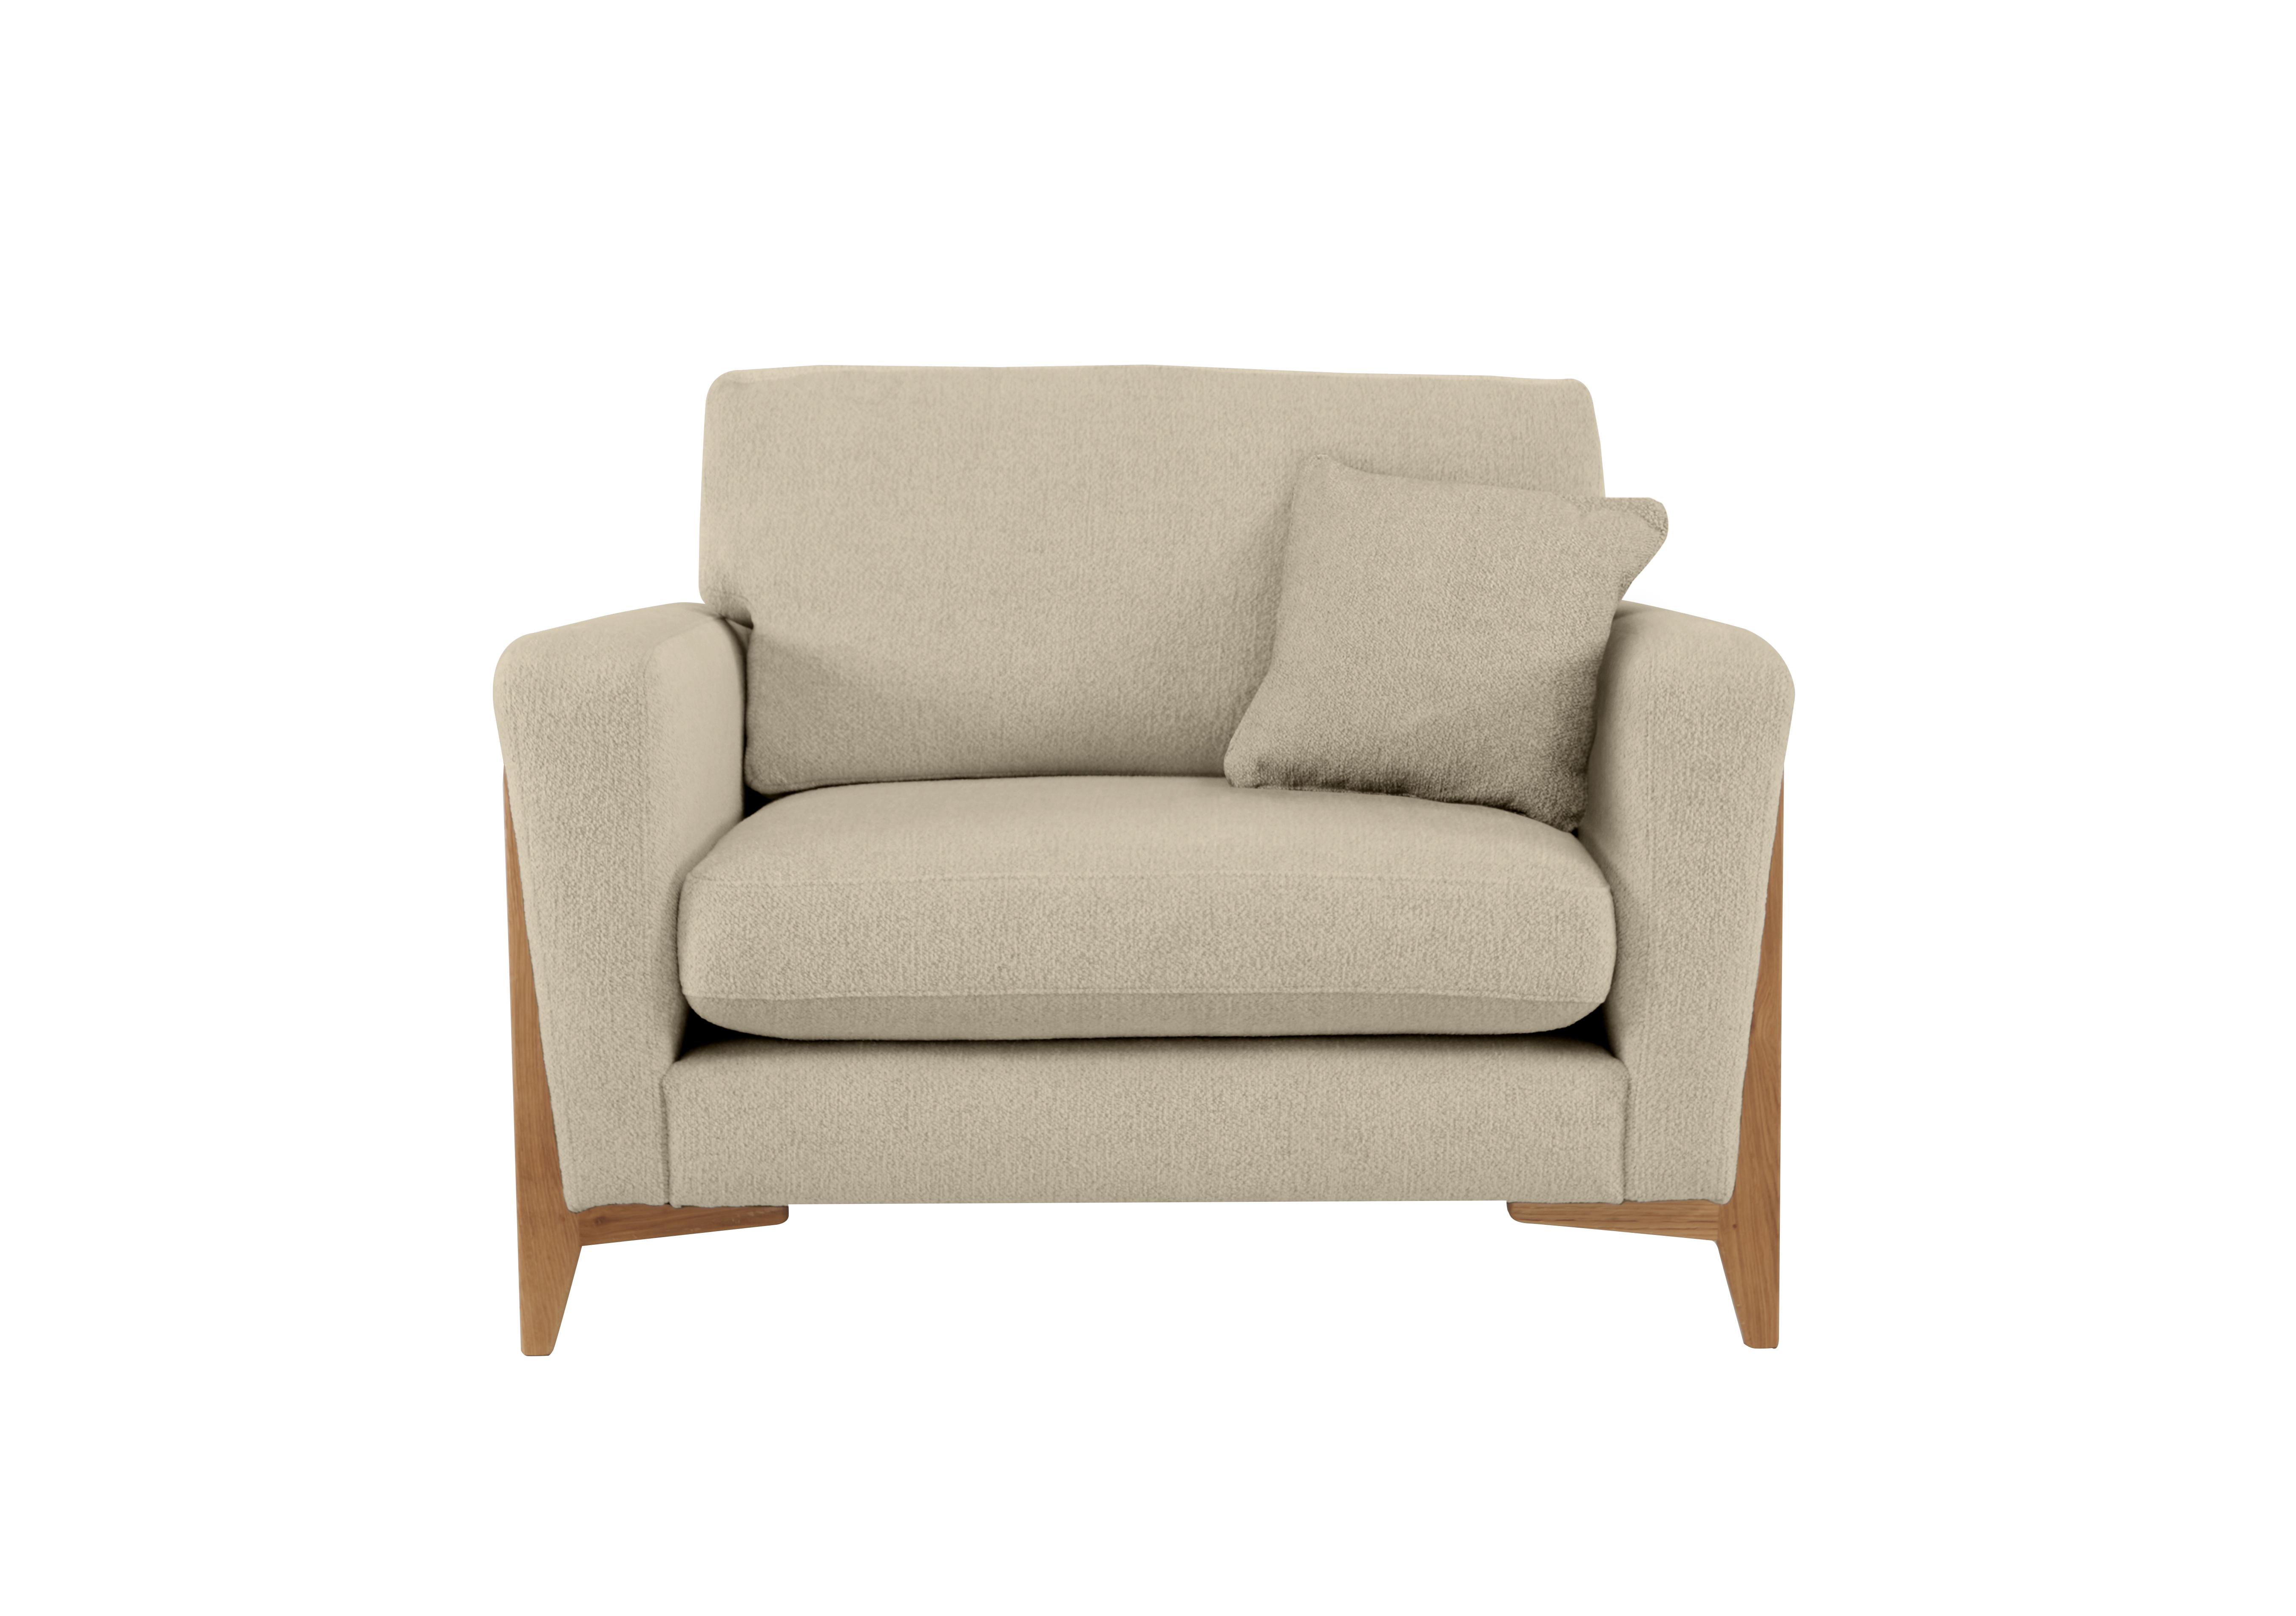 Marinello Snuggler Chair in T214 on Furniture Village